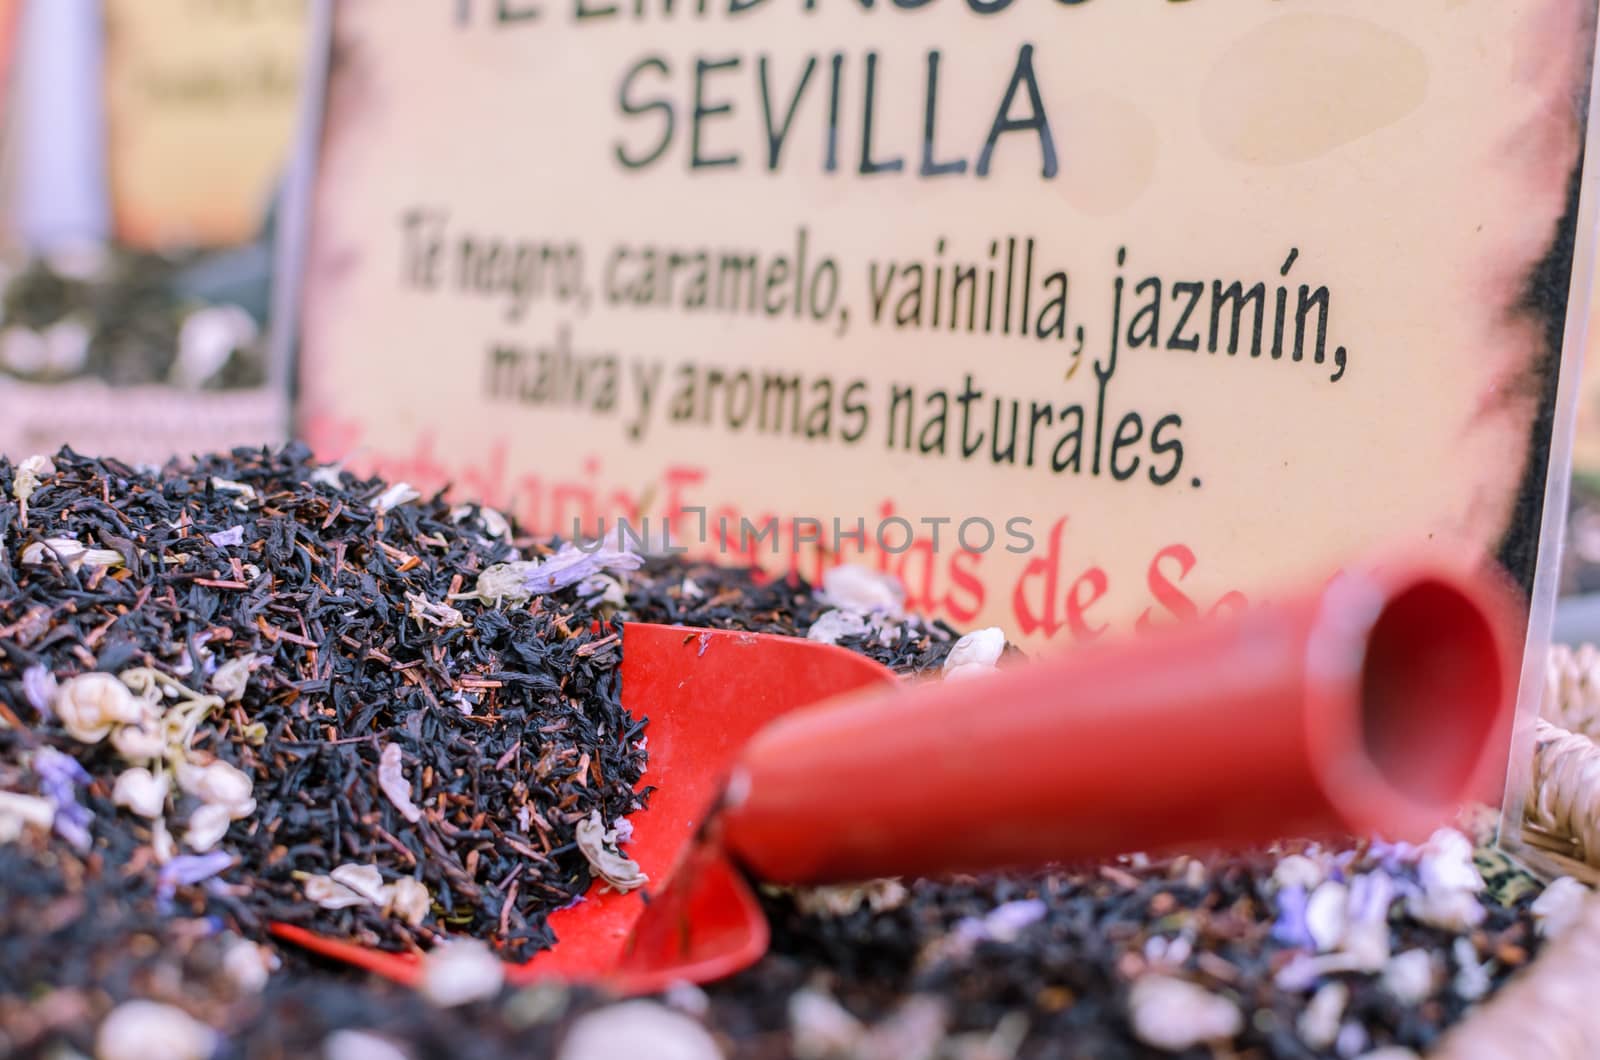 Original tea mixture called Sevilla by mikelju